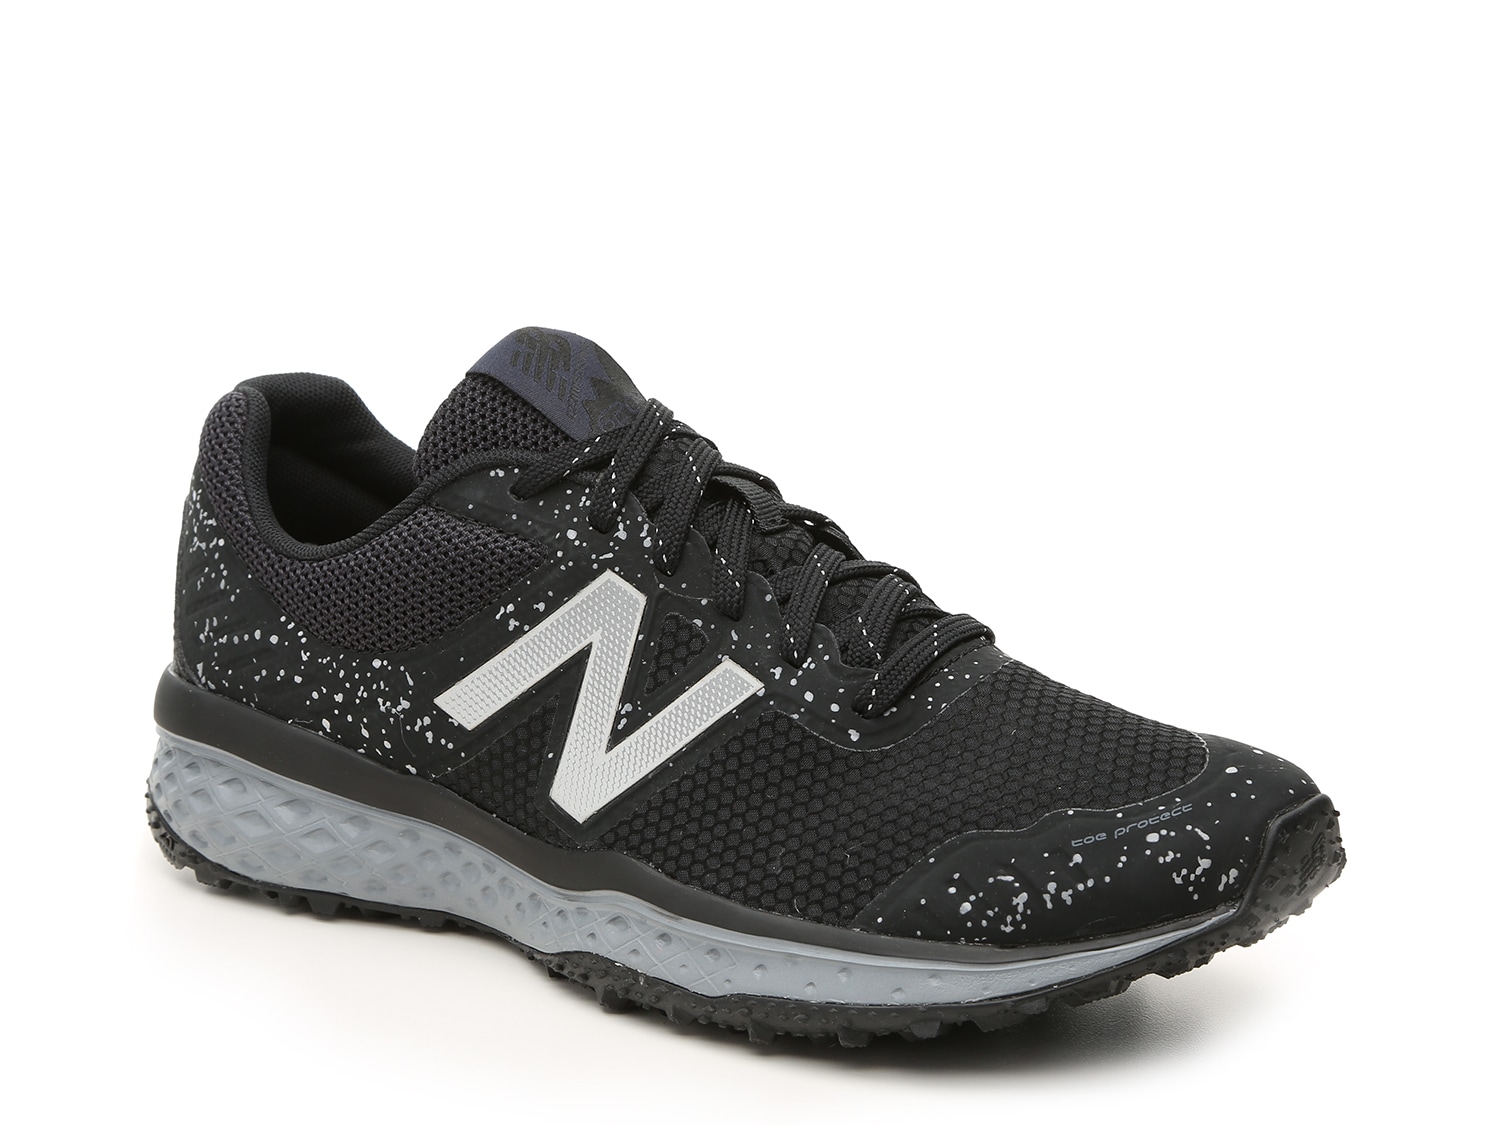 New Balance 620 v2 Trail Running Shoe 